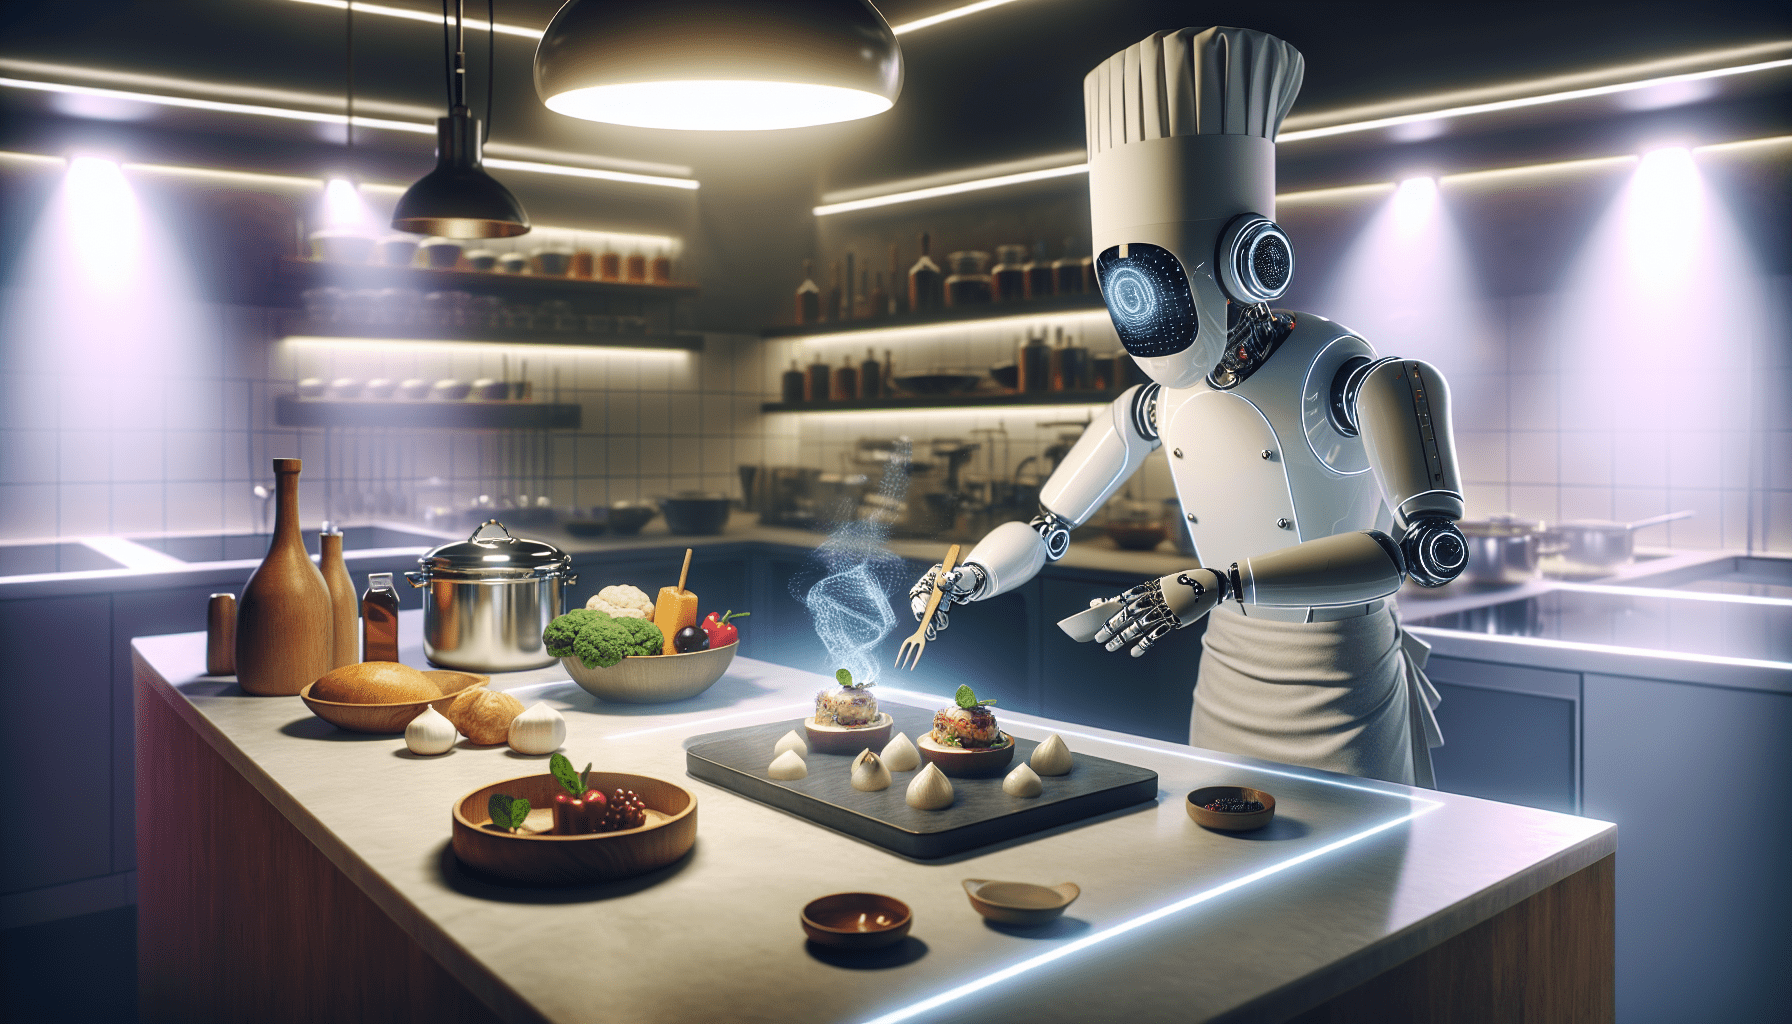 A Ética da Inteligência Artificial na Gastronomia